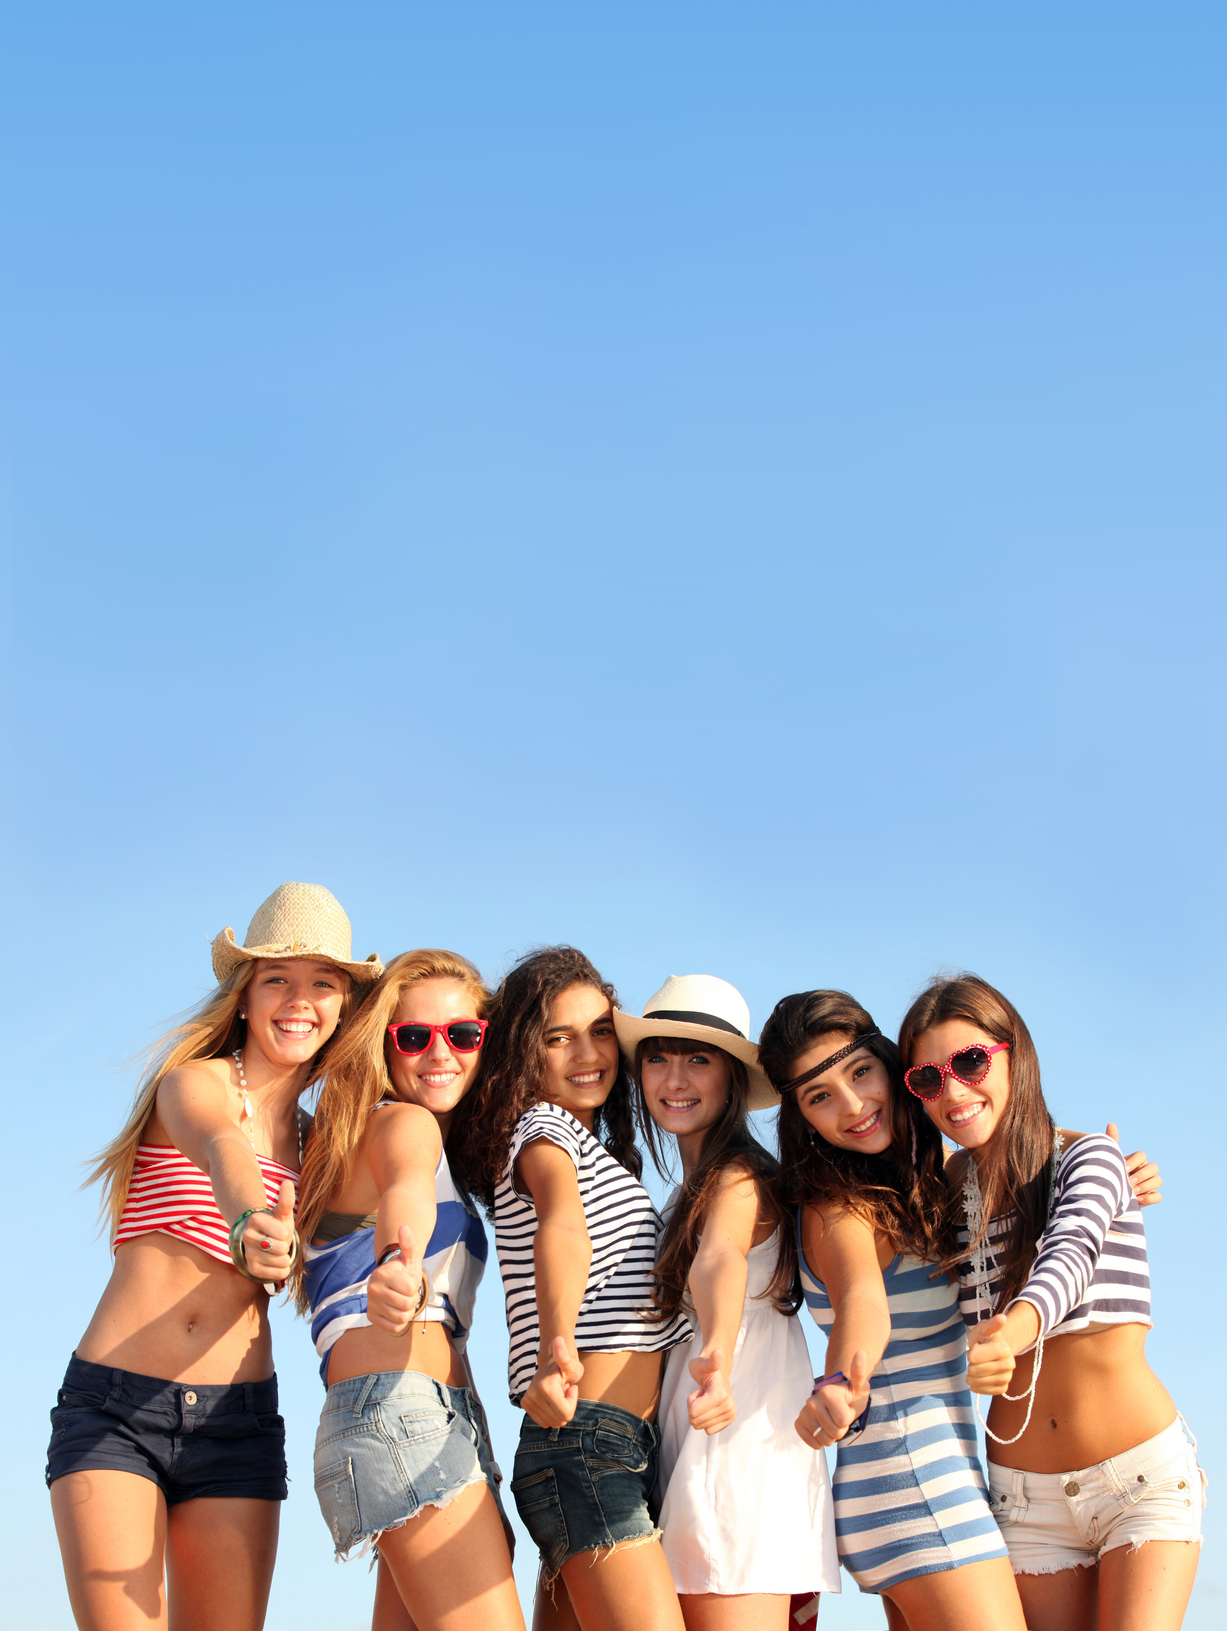 group of teens on beach summer vacation or spring break